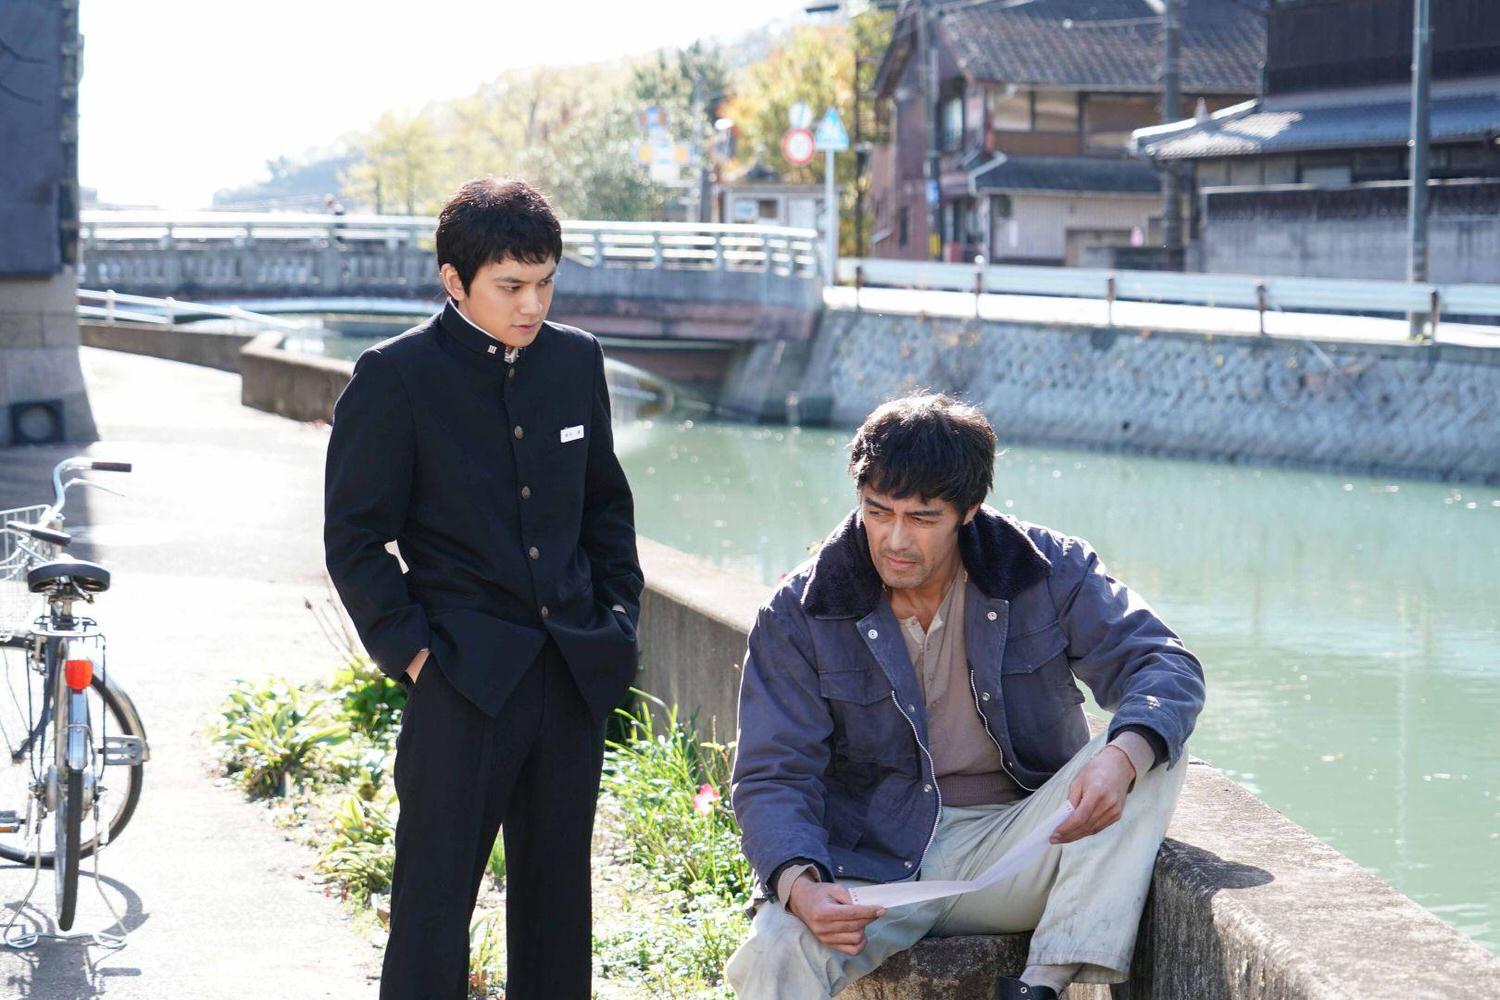 電影【鳶】 TONBI：Father and Son（日語：とんび）是一部2022年上映的日本劇情片，改編自重松清的暢銷經典小說《父子情深》